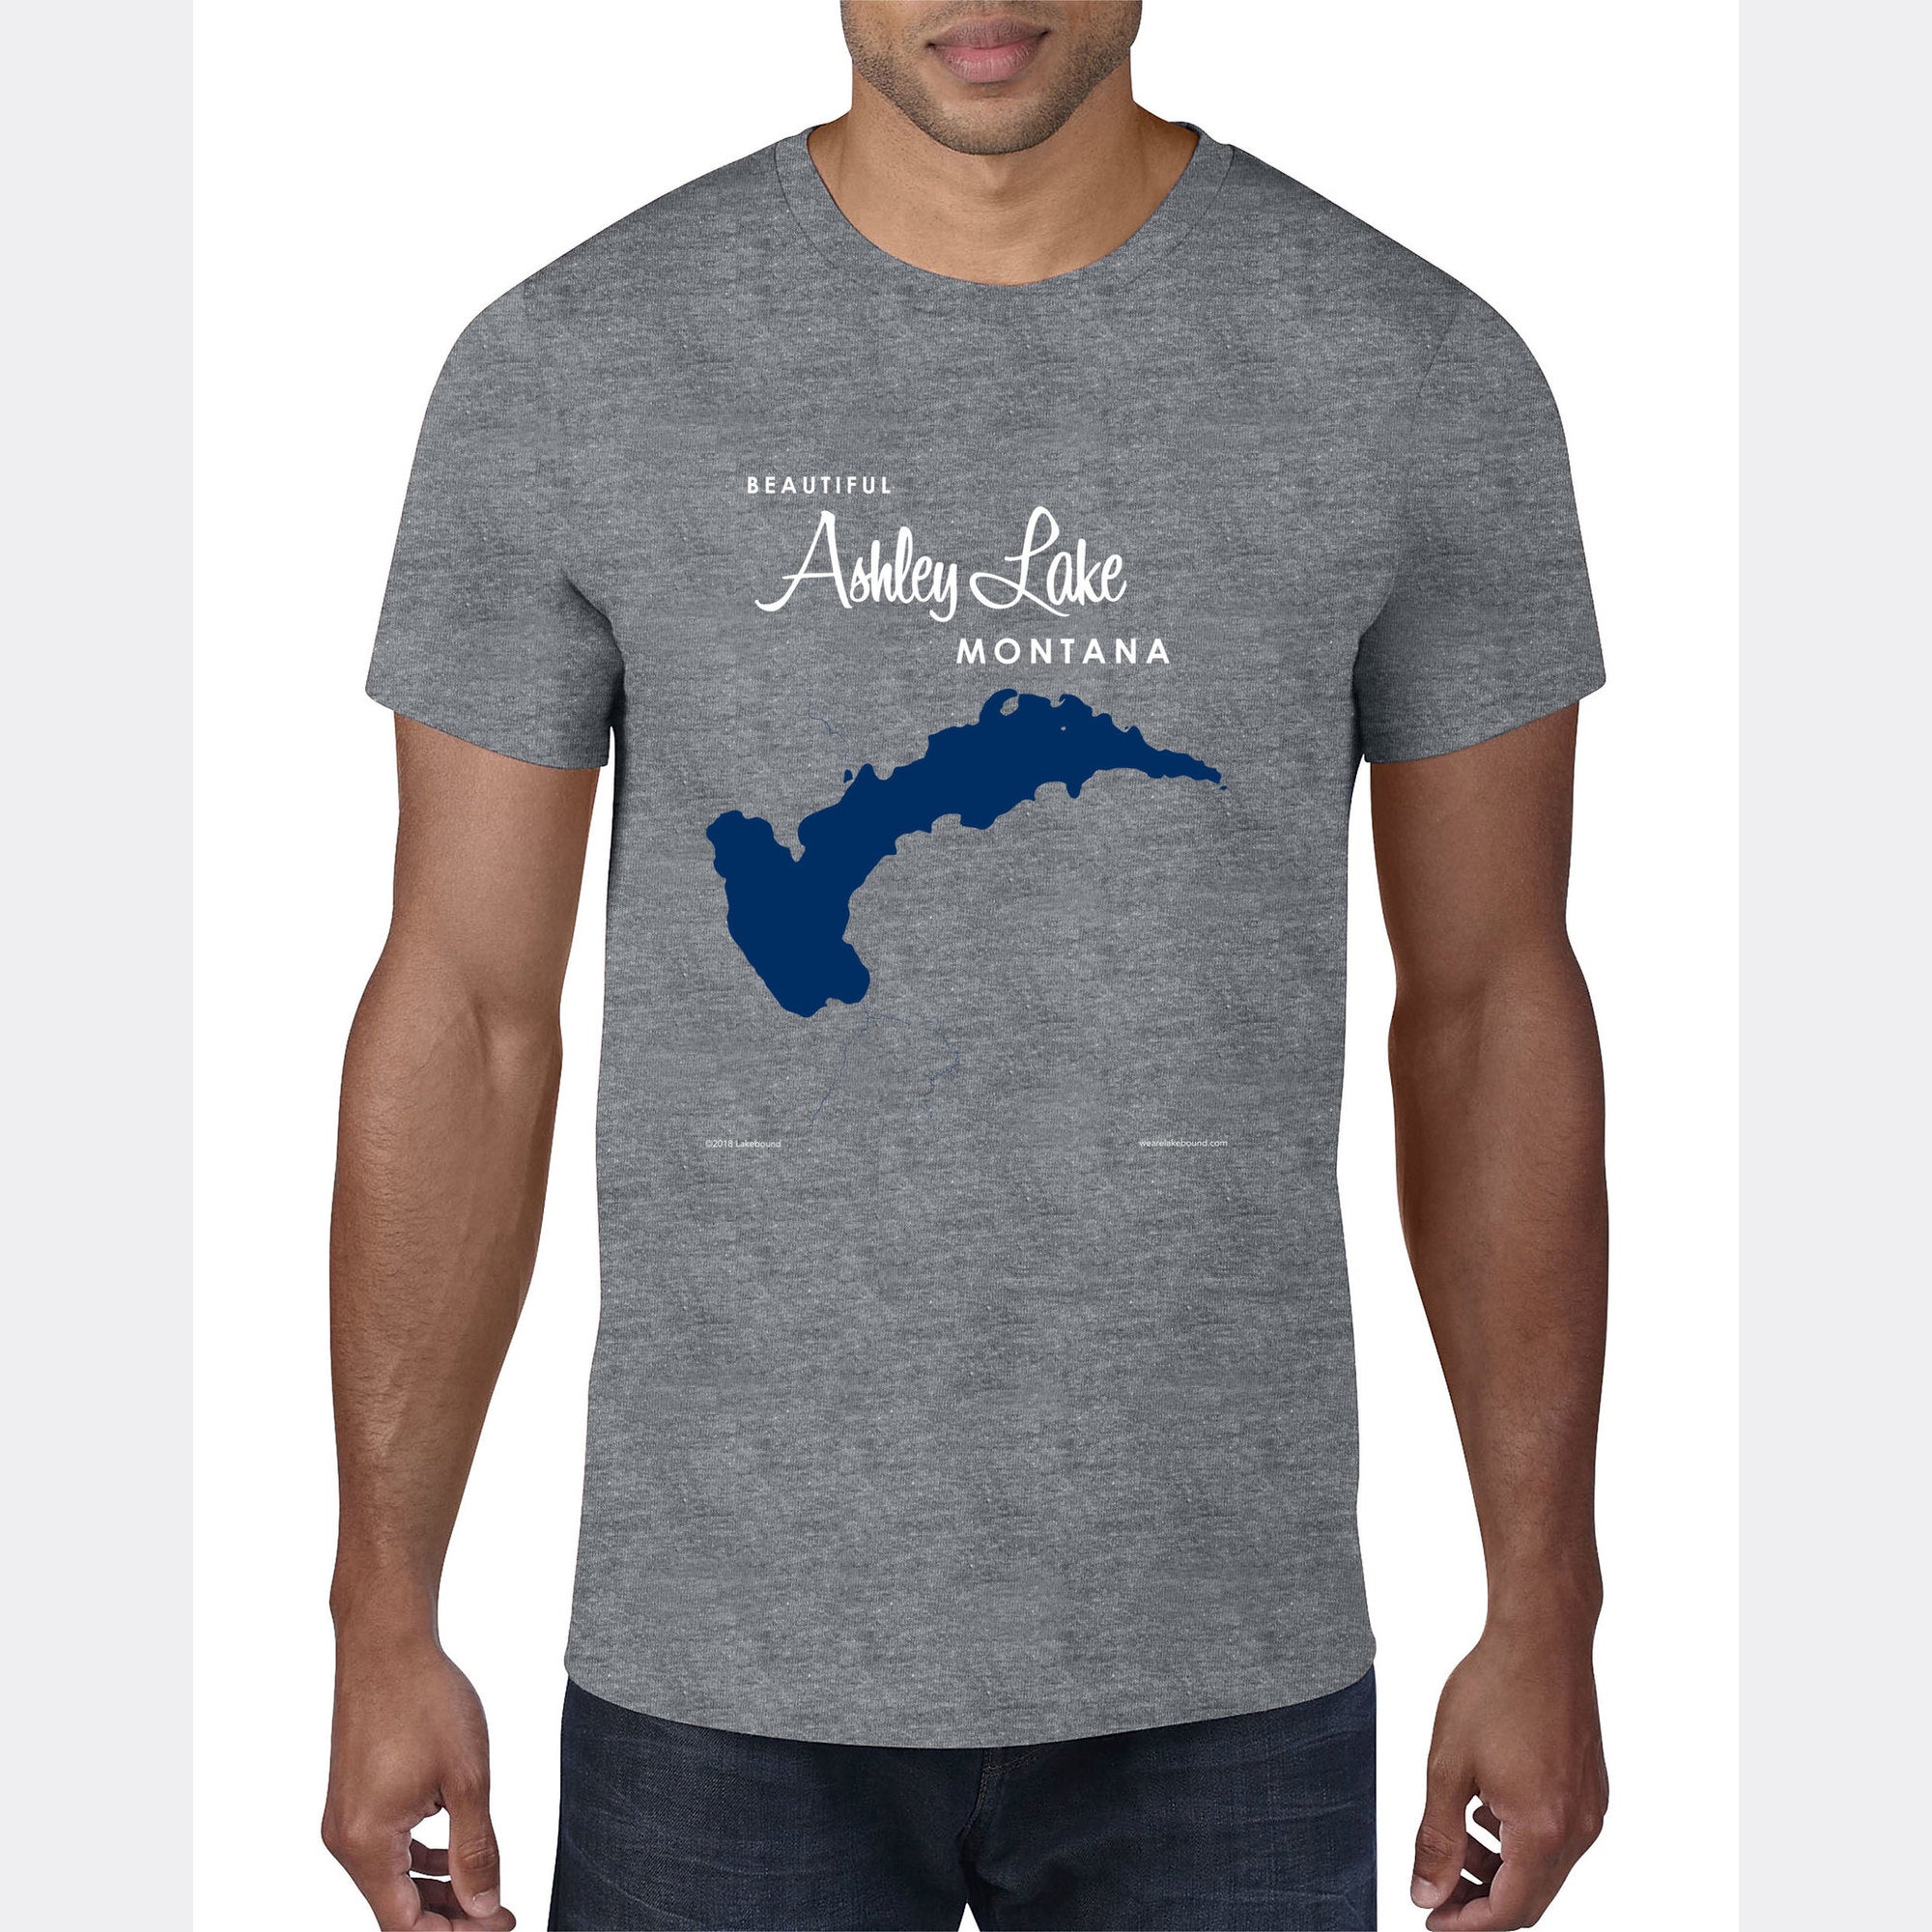 Ashley Lake Montana, T-Shirt